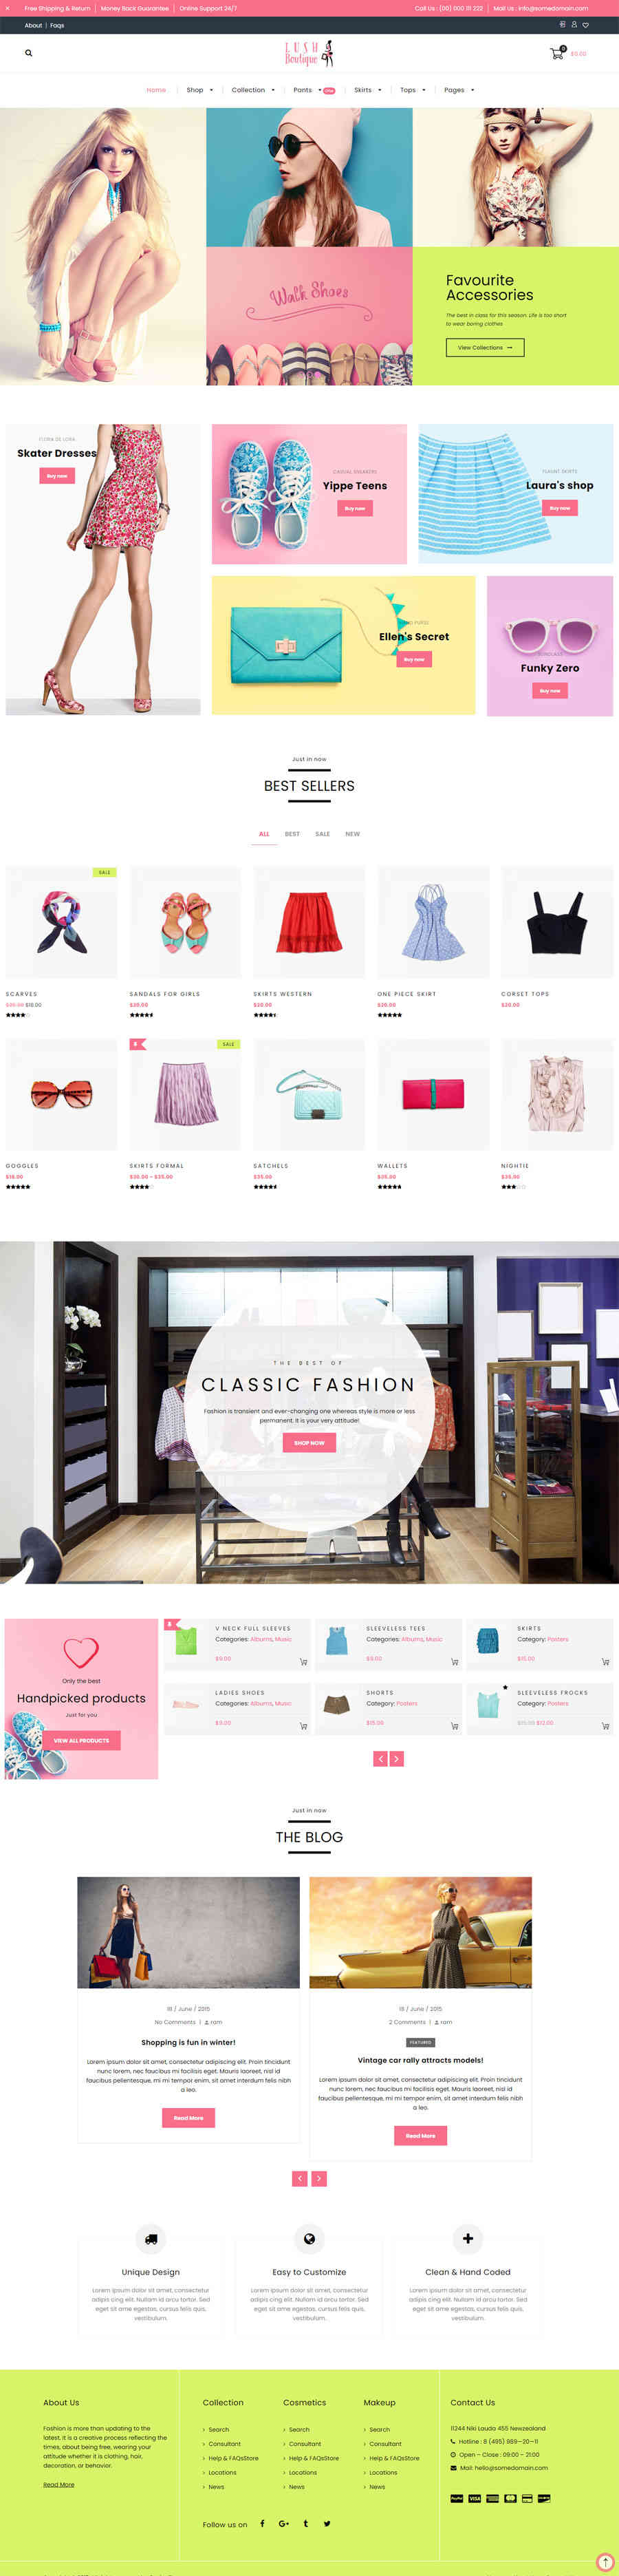 thiet ke website tmi fashion shop 4049